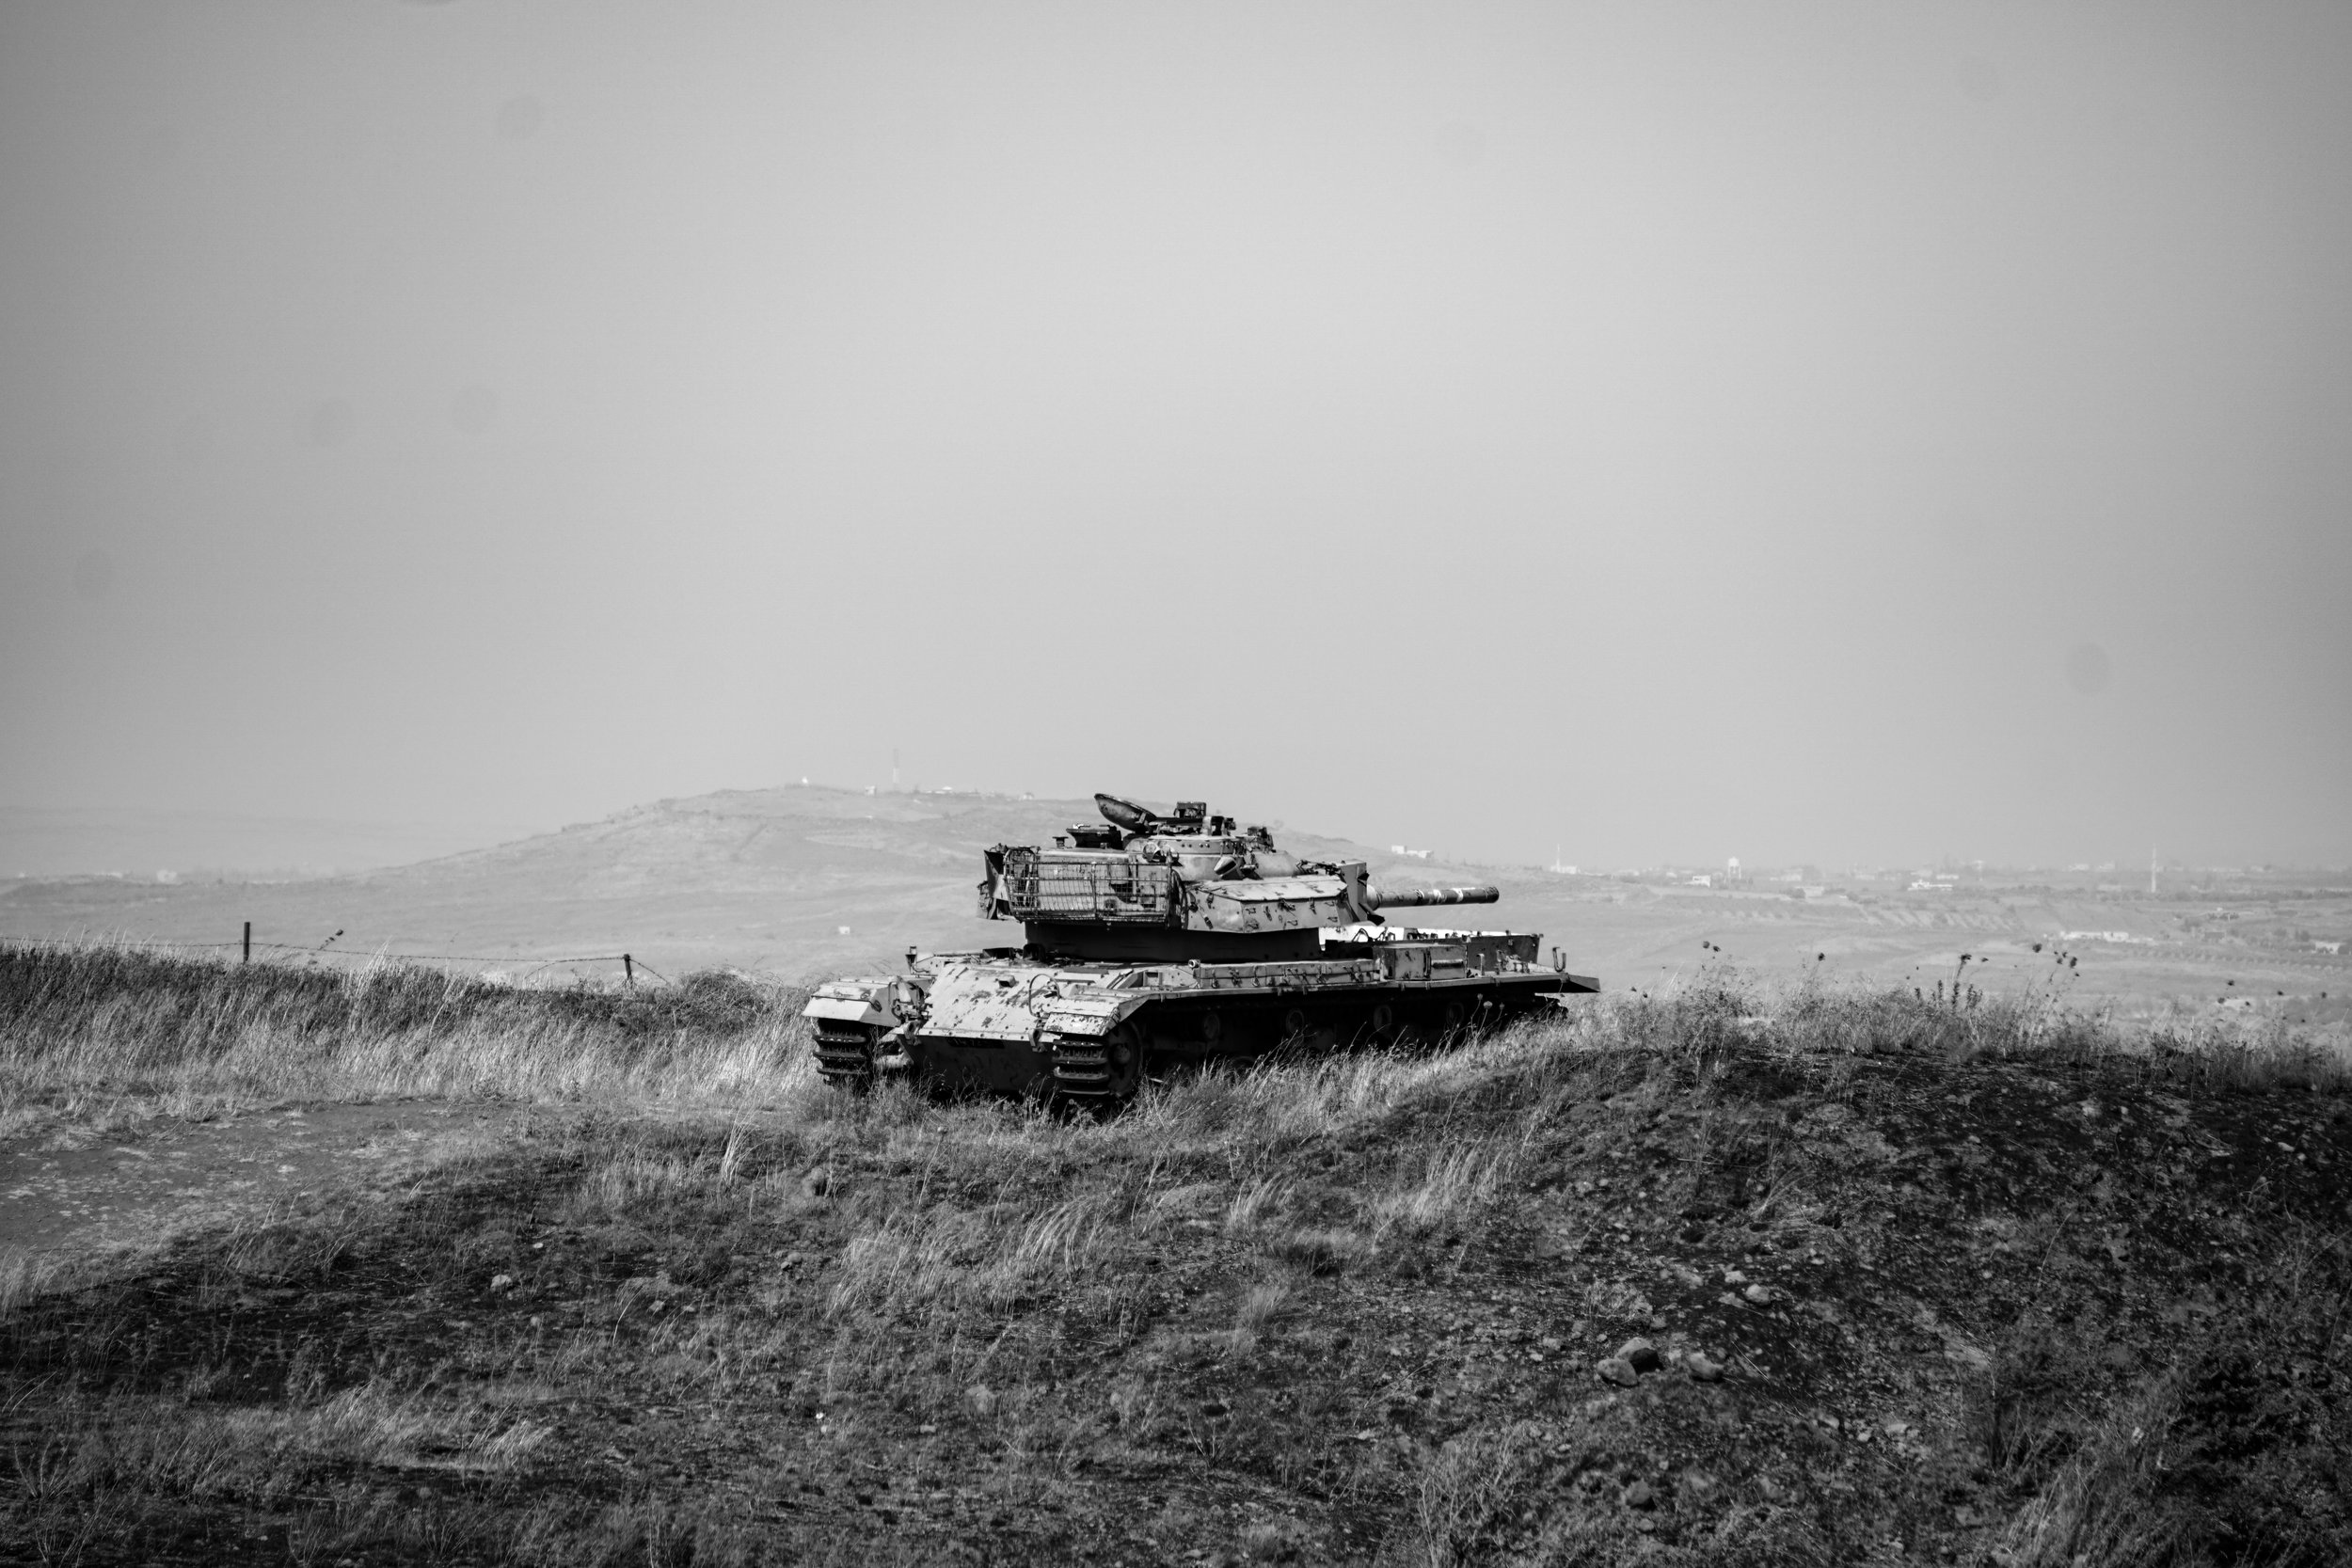   "Civil War"&nbsp;   Syrian / Israeli Border || July 2015 || Sony A6000 